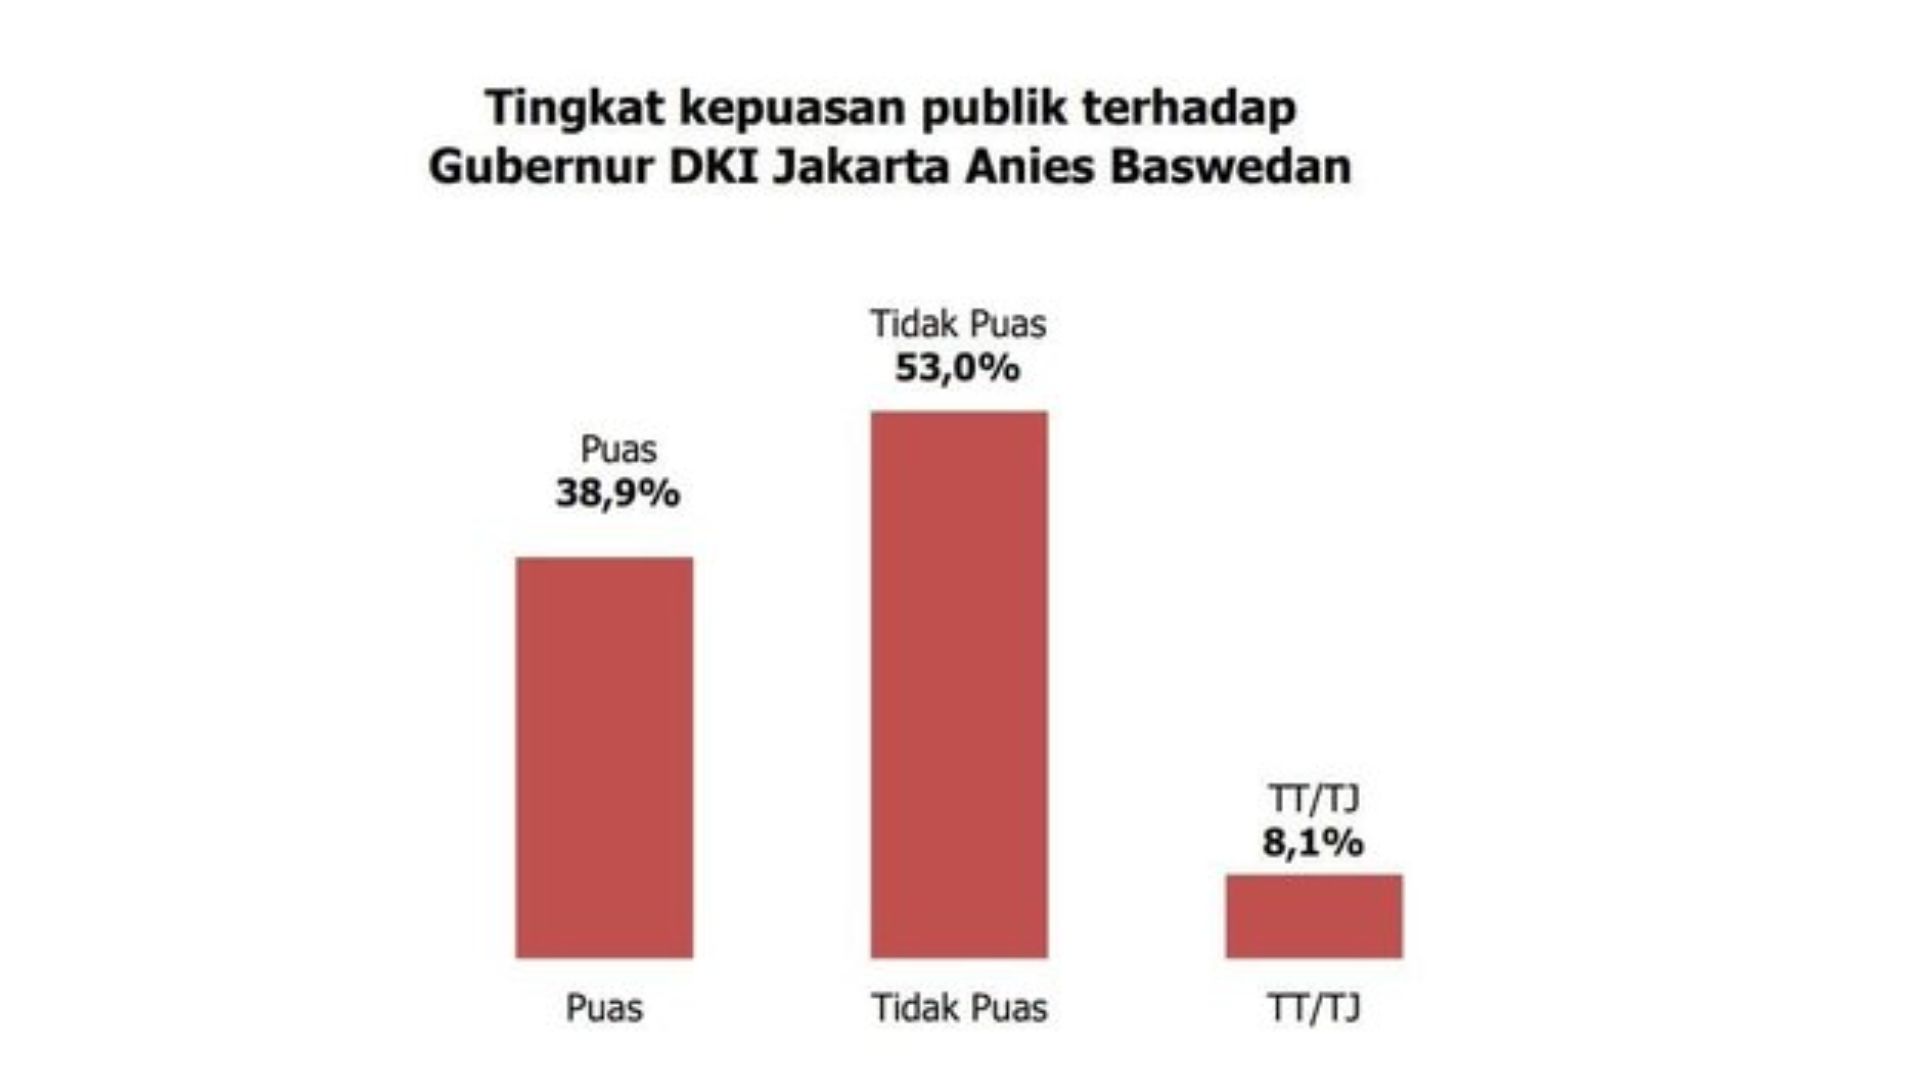 Hasil survei yang dilakukan Jakarta Research Center (JRC) terhadap tingkat kepuasan publik terhadap Gubernur DKI Jakarta Anies Baswedan. 